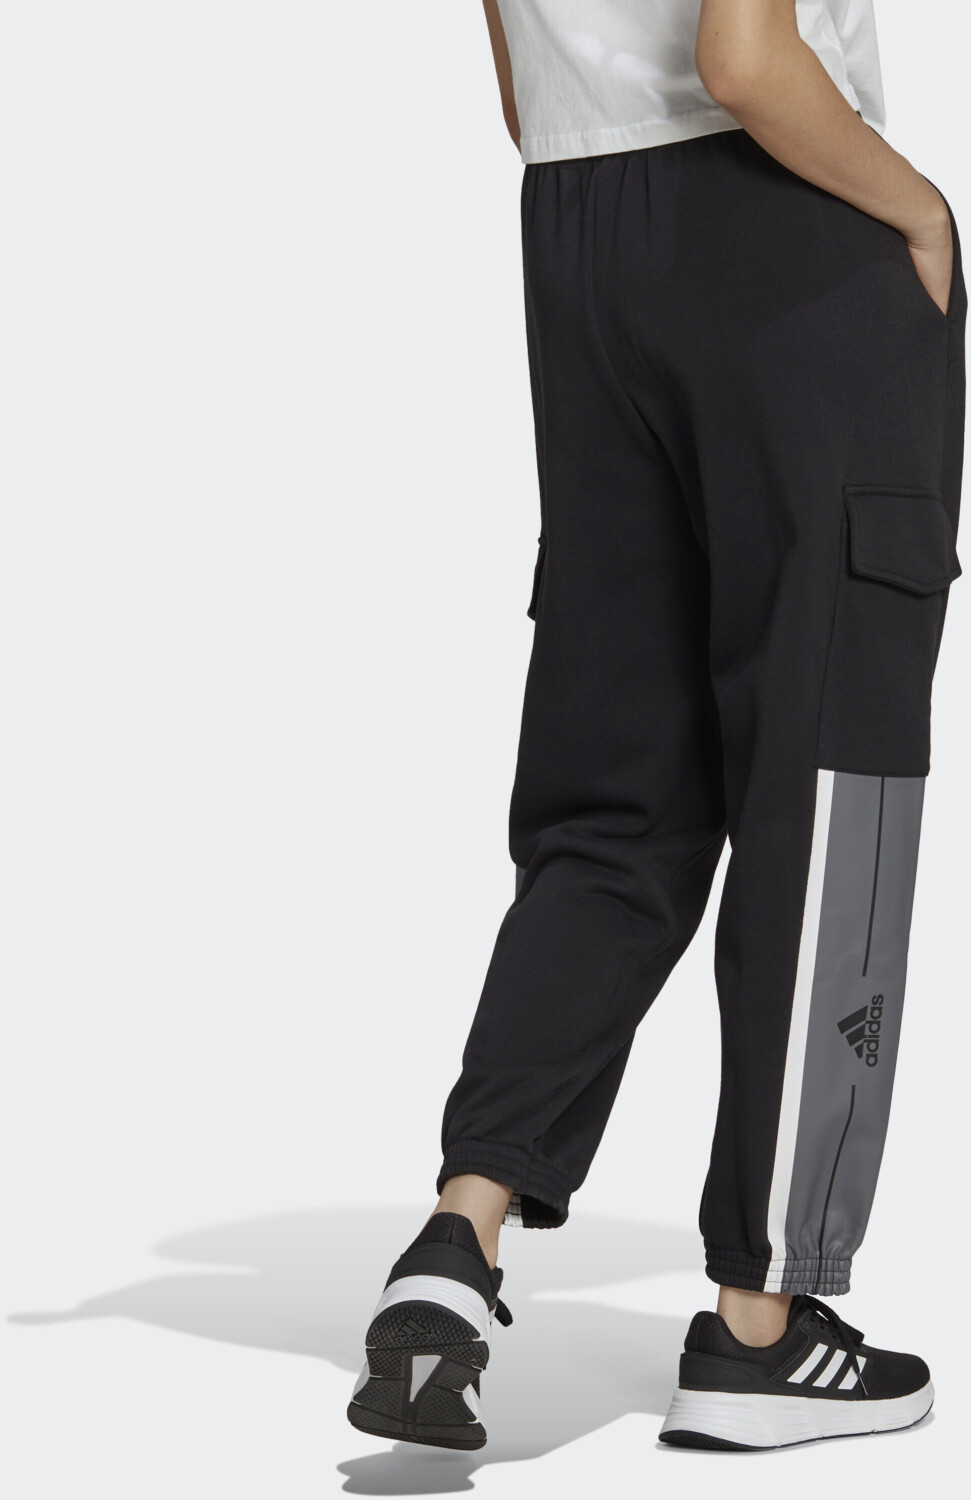 Adidas Woman Essentials Pants Pin Stripe Cargo bei Four/white 23,99 black/grey Block (HL2110) € Fleece ab | Preisvergleich